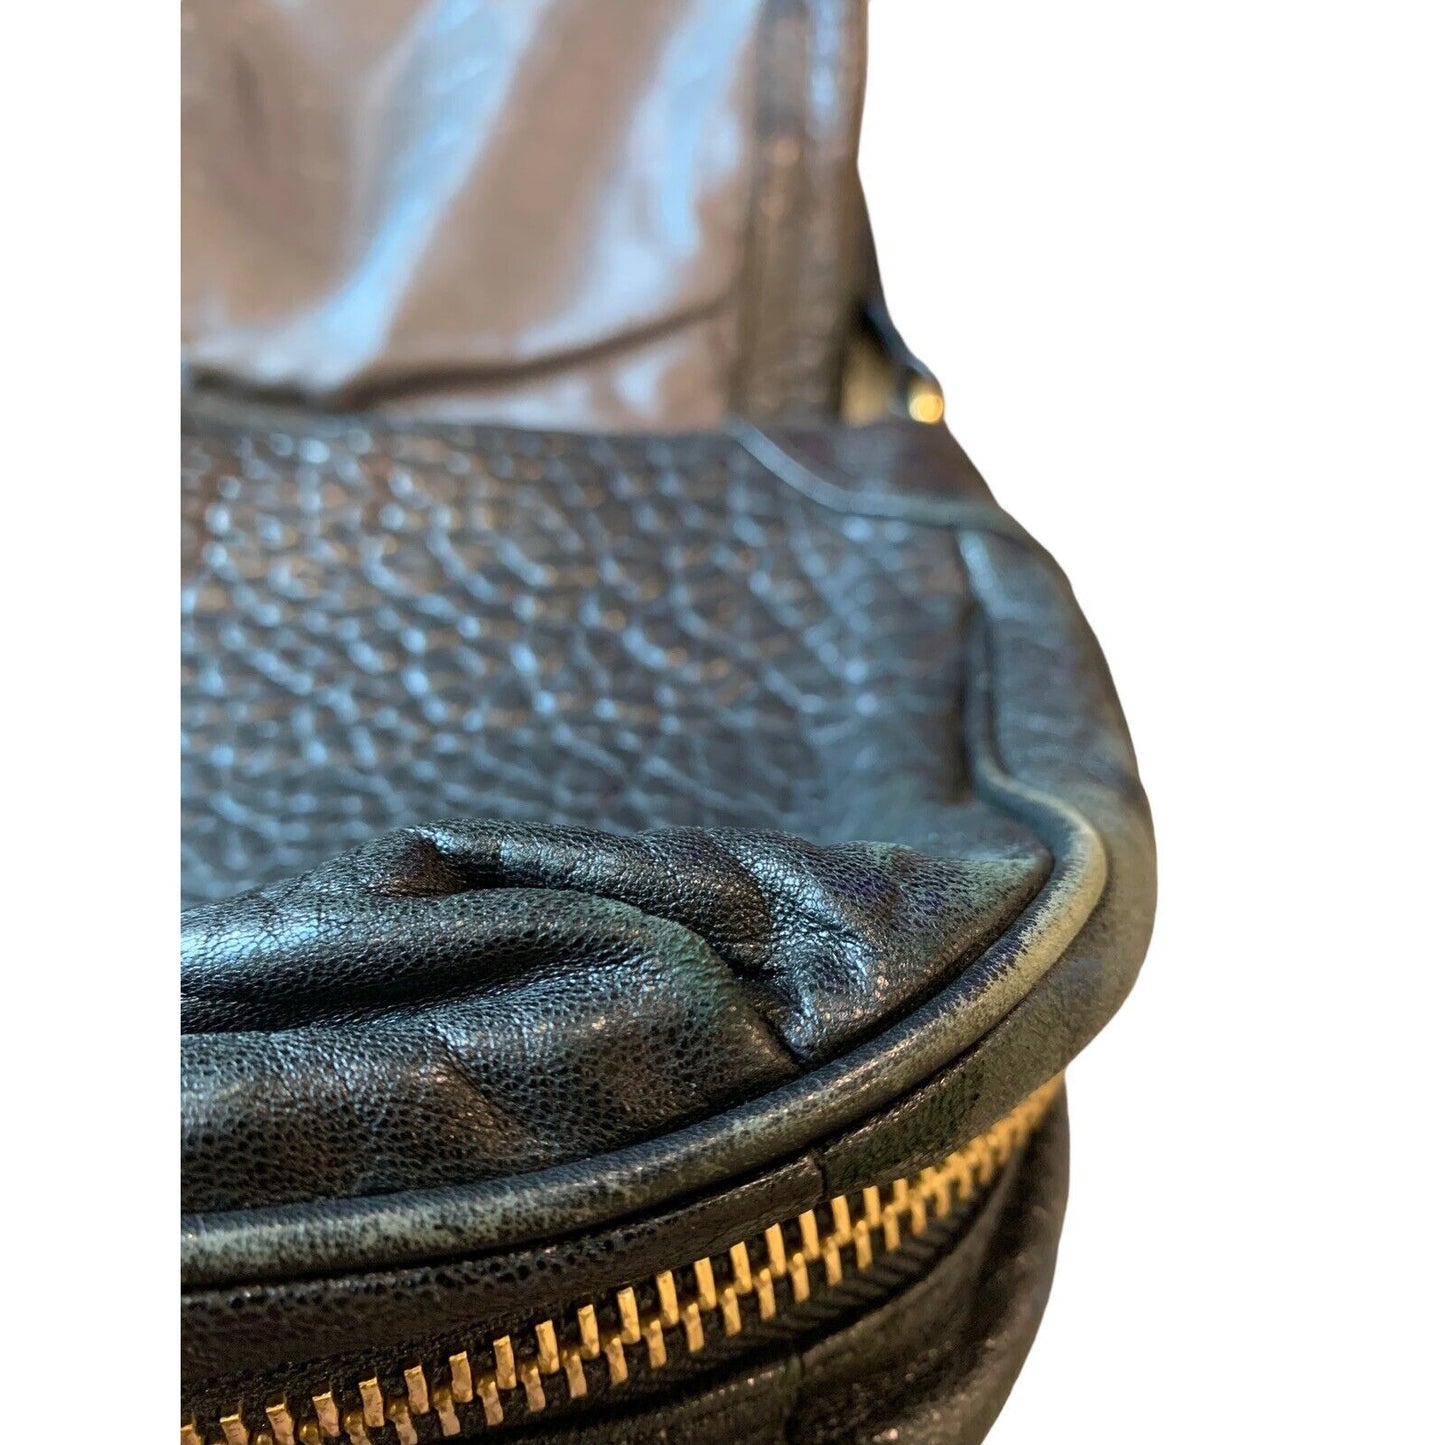 Marc by Marc Jacobs Leather Flap Shoulder Bag with Zipper Details